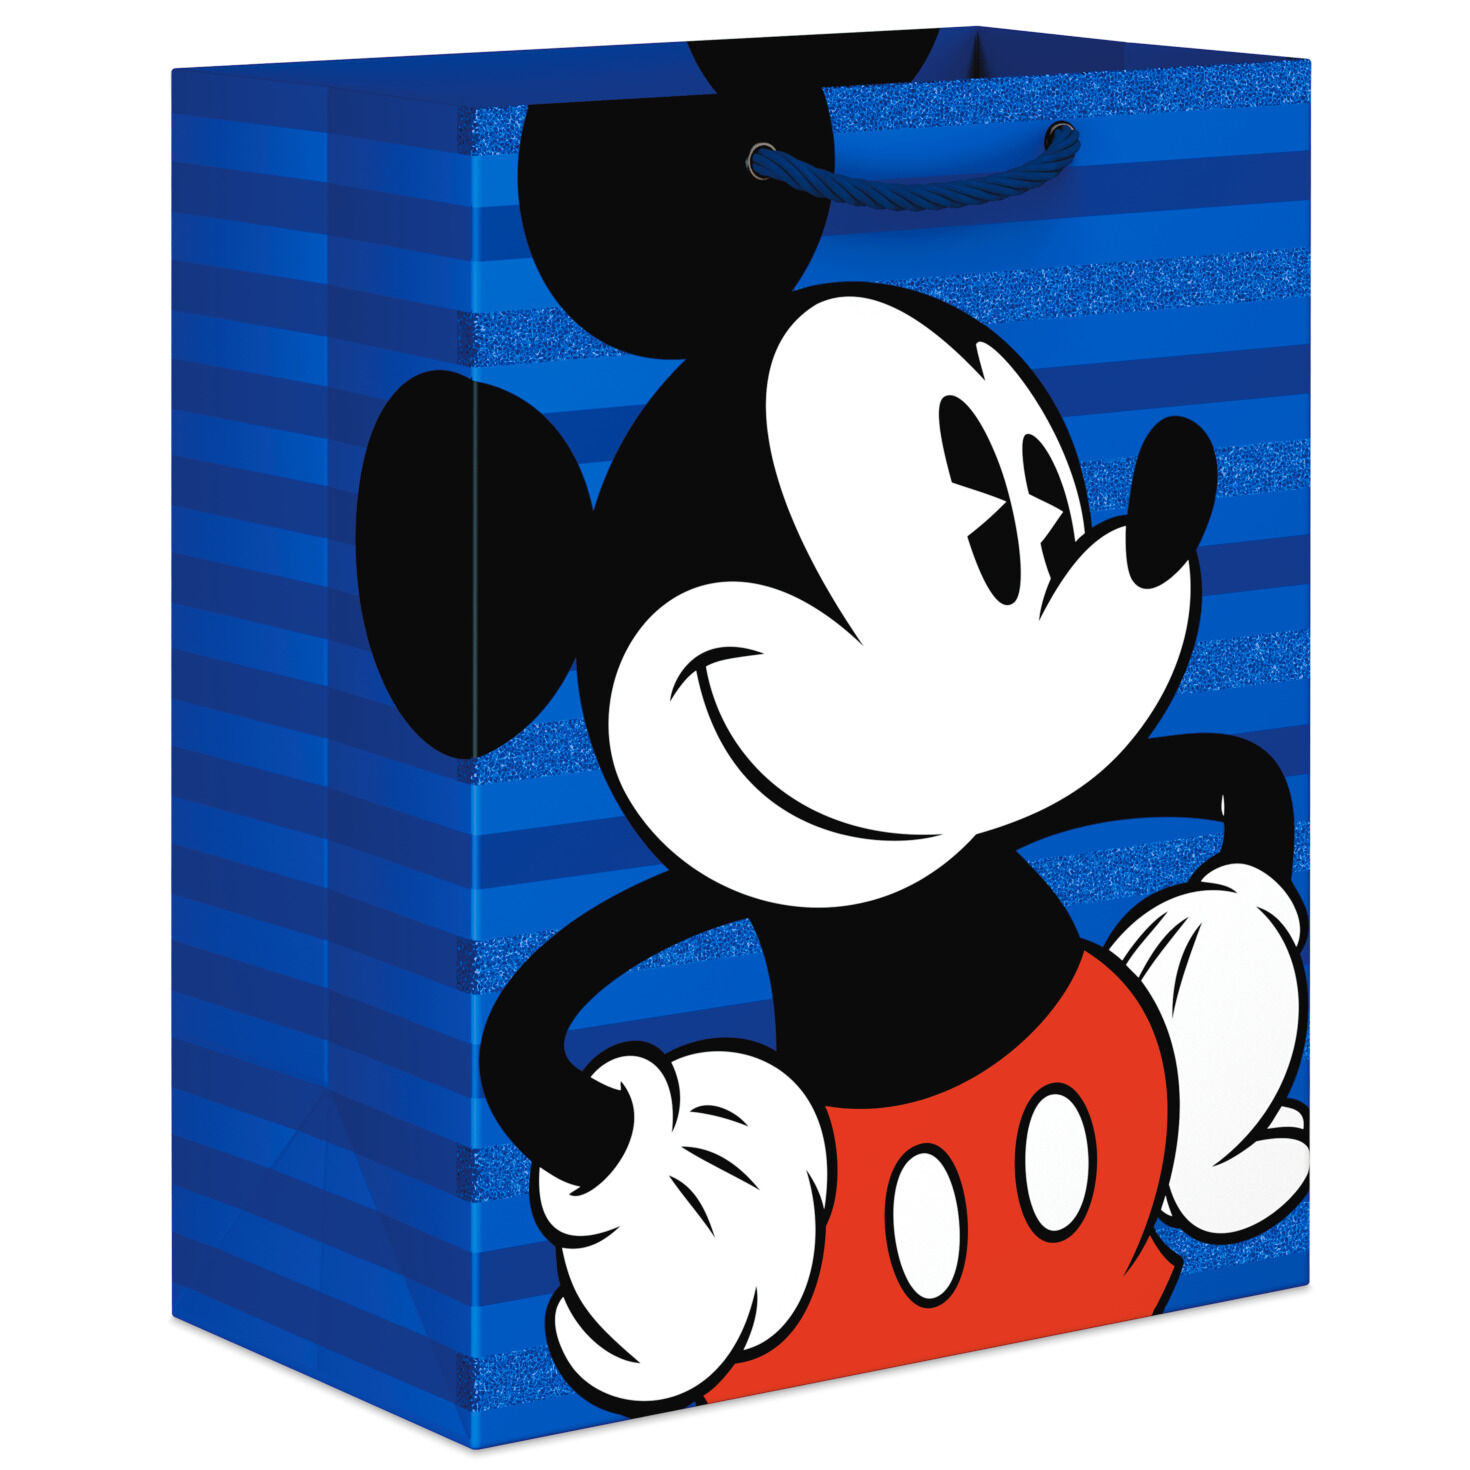 https://www.hallmark.com/dw/image/v2/AALB_PRD/on/demandware.static/-/Sites-hallmark-master/default/dw54454c1d/images/finished-goods/Mickey-Mouse-on-Blue-Stripes-Medium-Gift-Bag_299EGB6459_01.jpg?sfrm=jpg